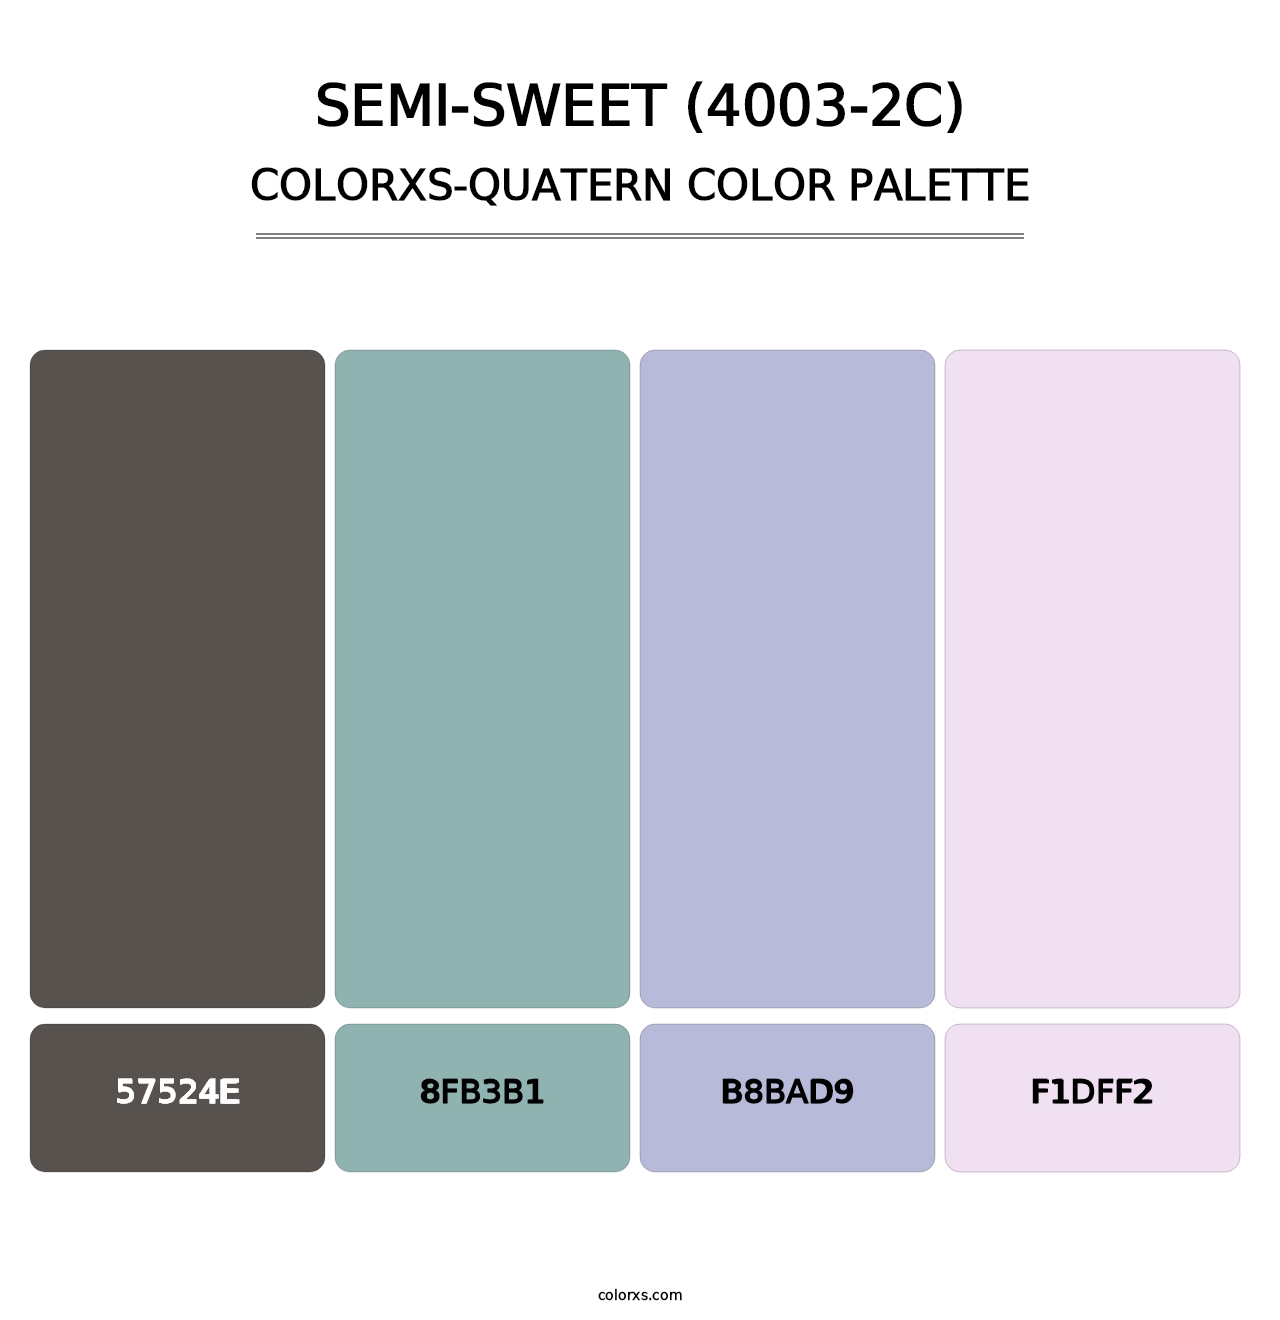 Semi-Sweet (4003-2C) - Colorxs Quatern Palette